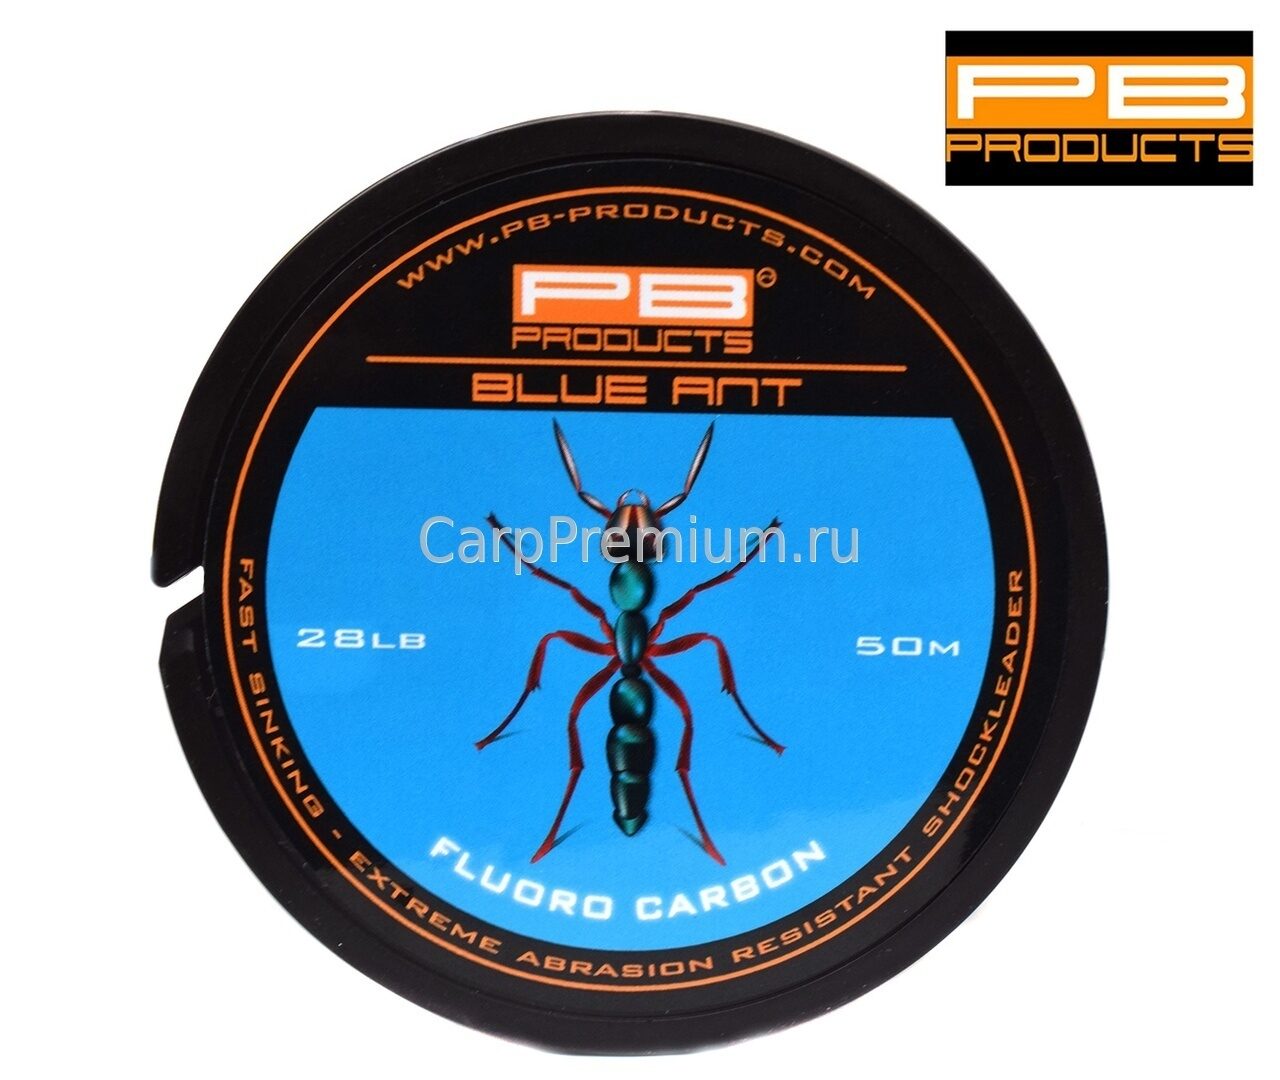 Шок-лидер флюорокарбоновый PB Products - Blue Ant 12.7 кг / 28 lb, 50 м